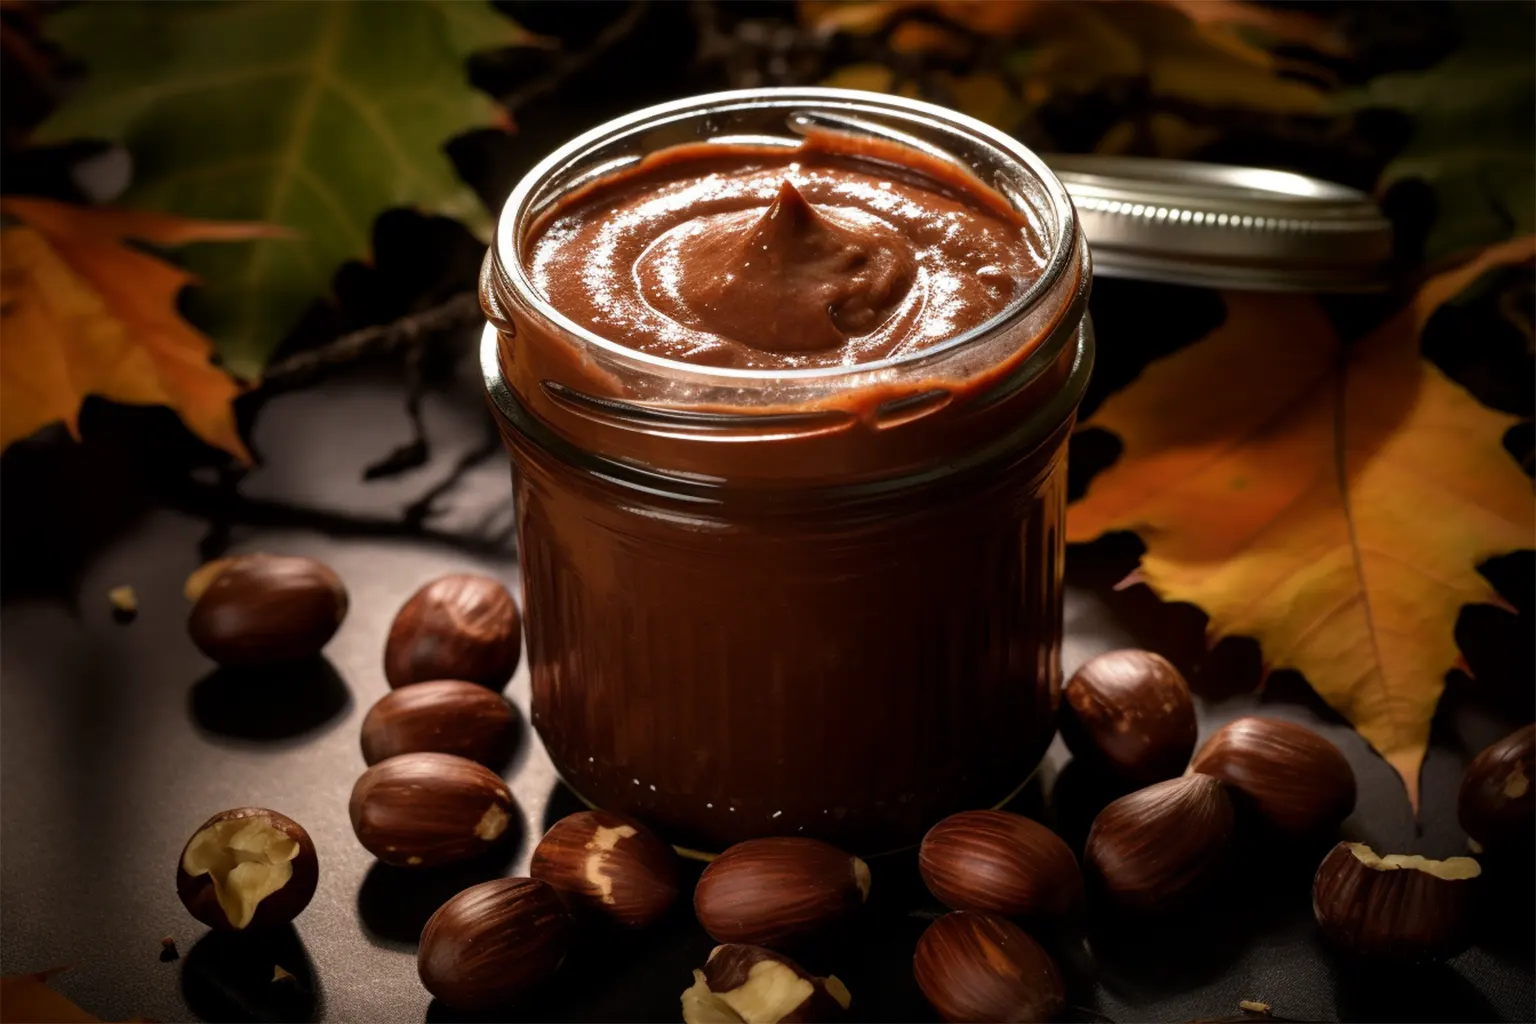 Newtella - Chocolate Cream Made From Acorns